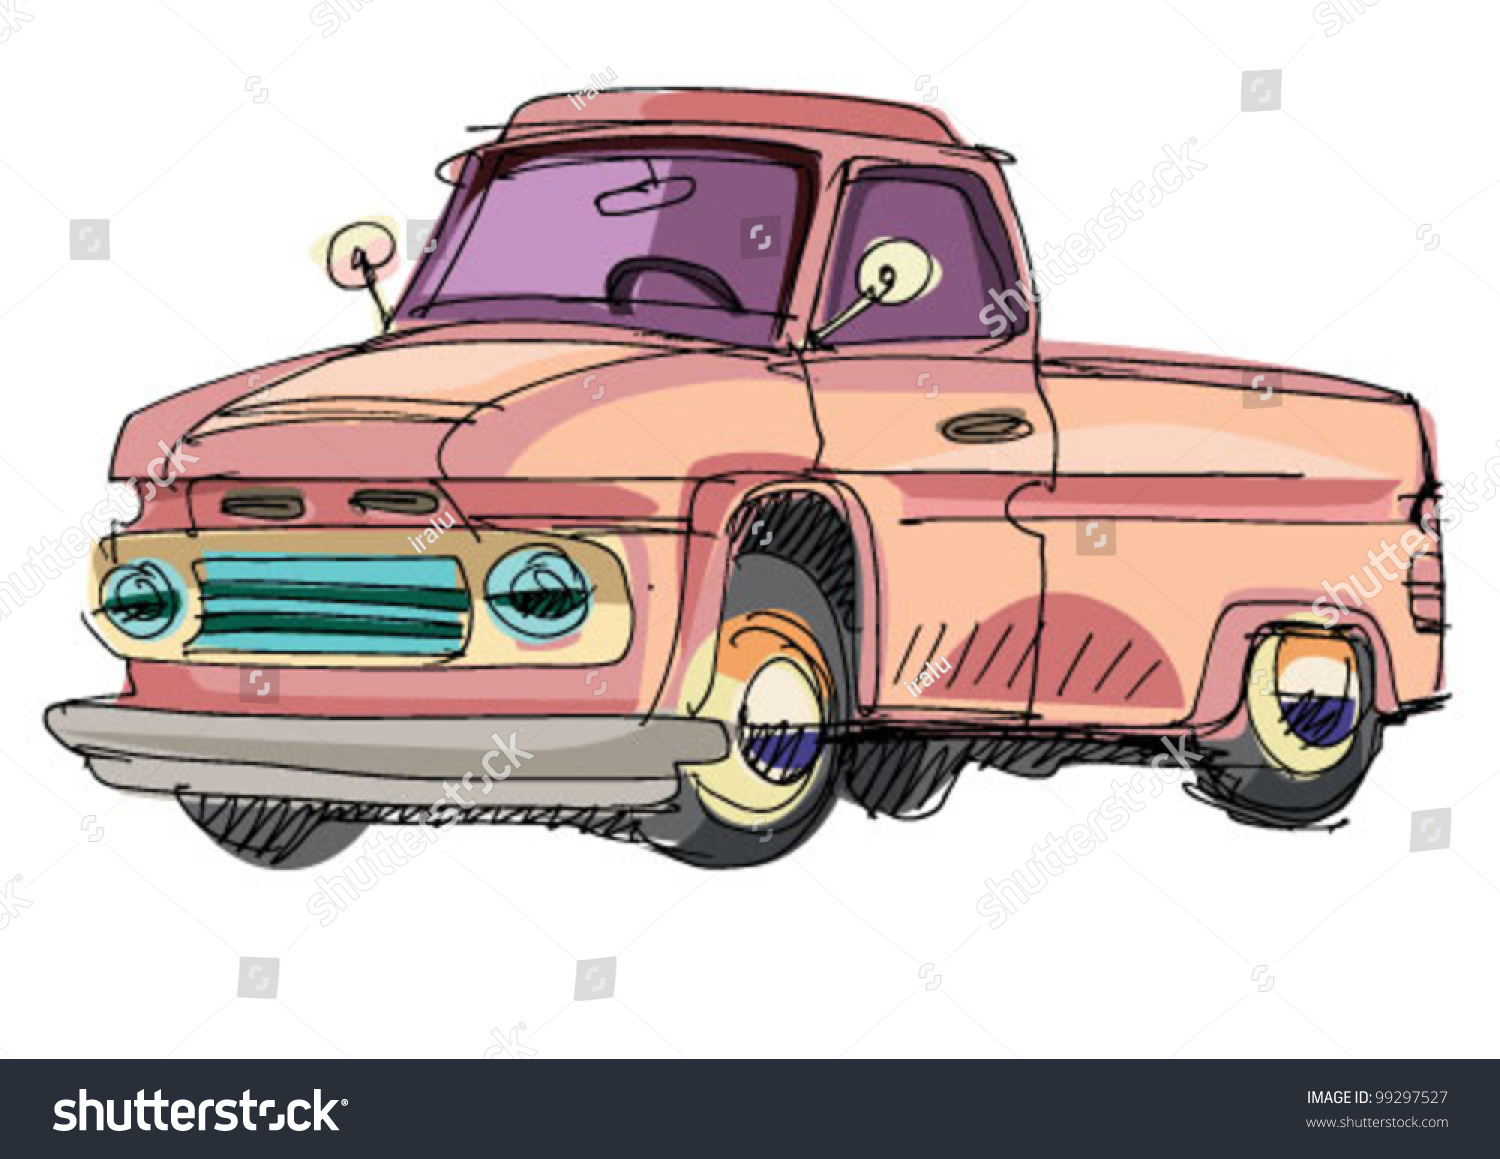 Old Car Cartoon Stock Vector 99297527 - Shutterstock